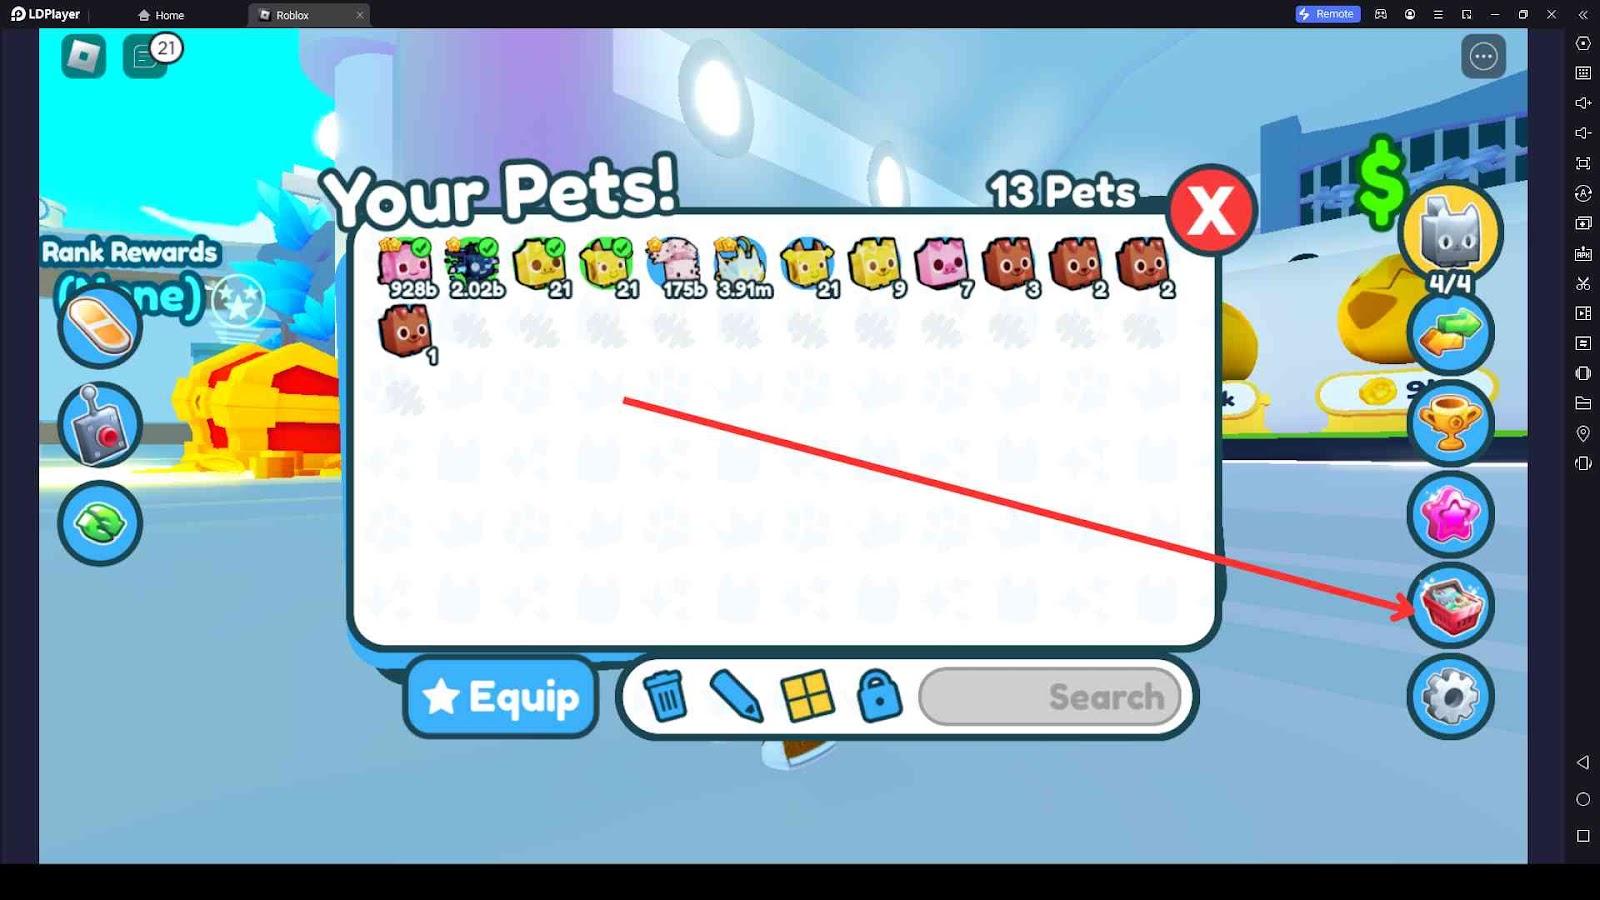 Pet Sim X Exclusive Pet Codes